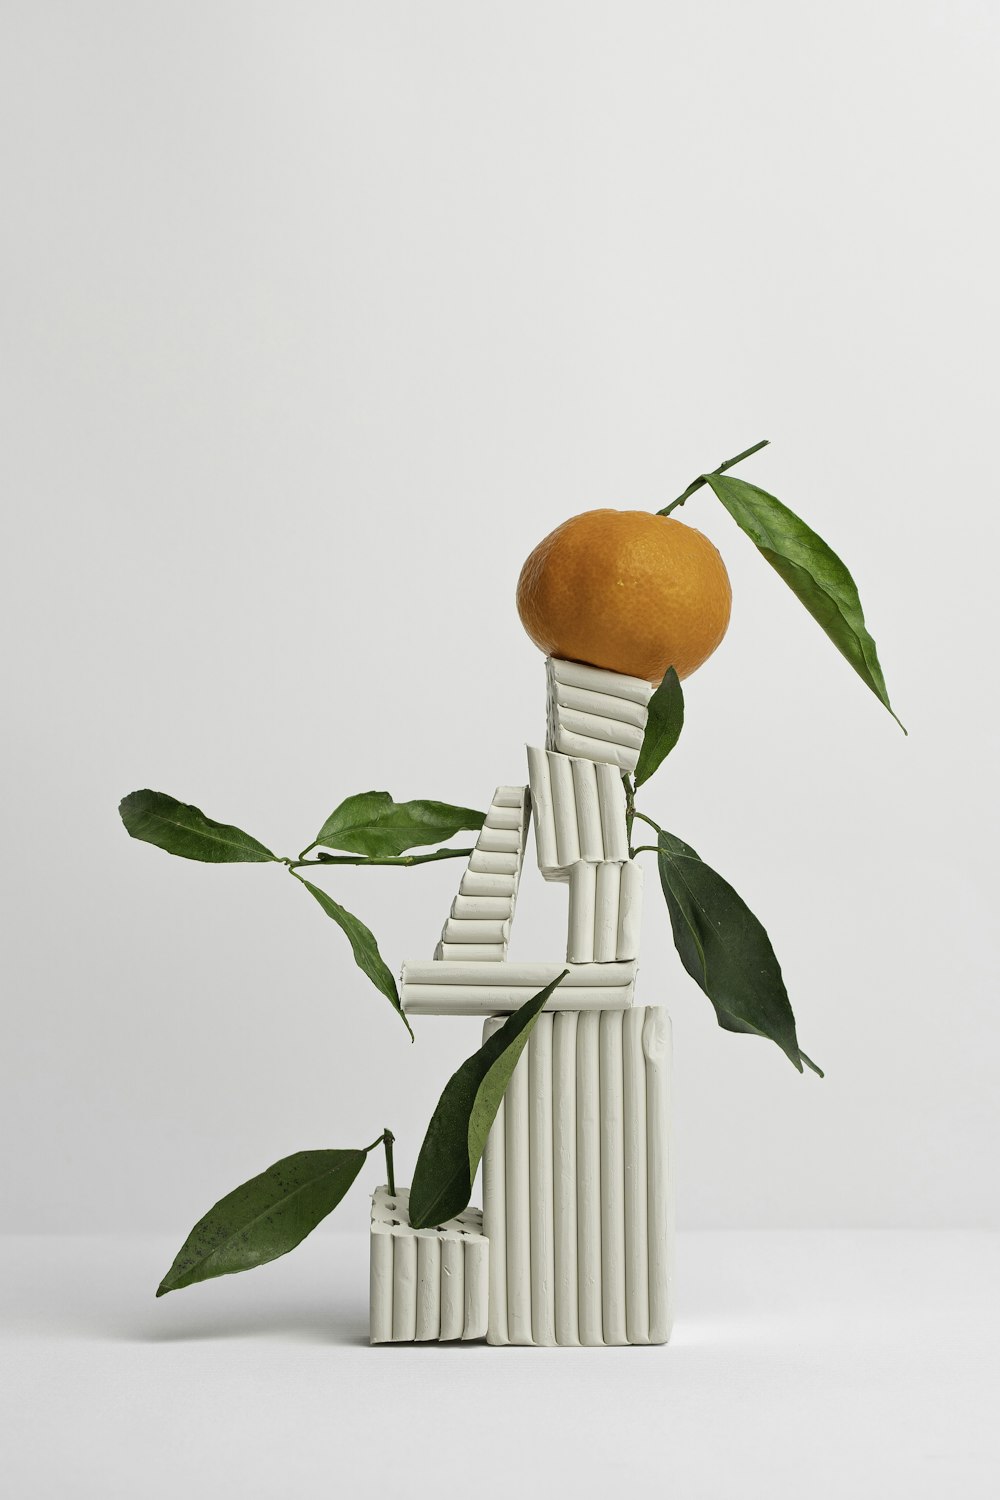 orange fruit on balancing fragments